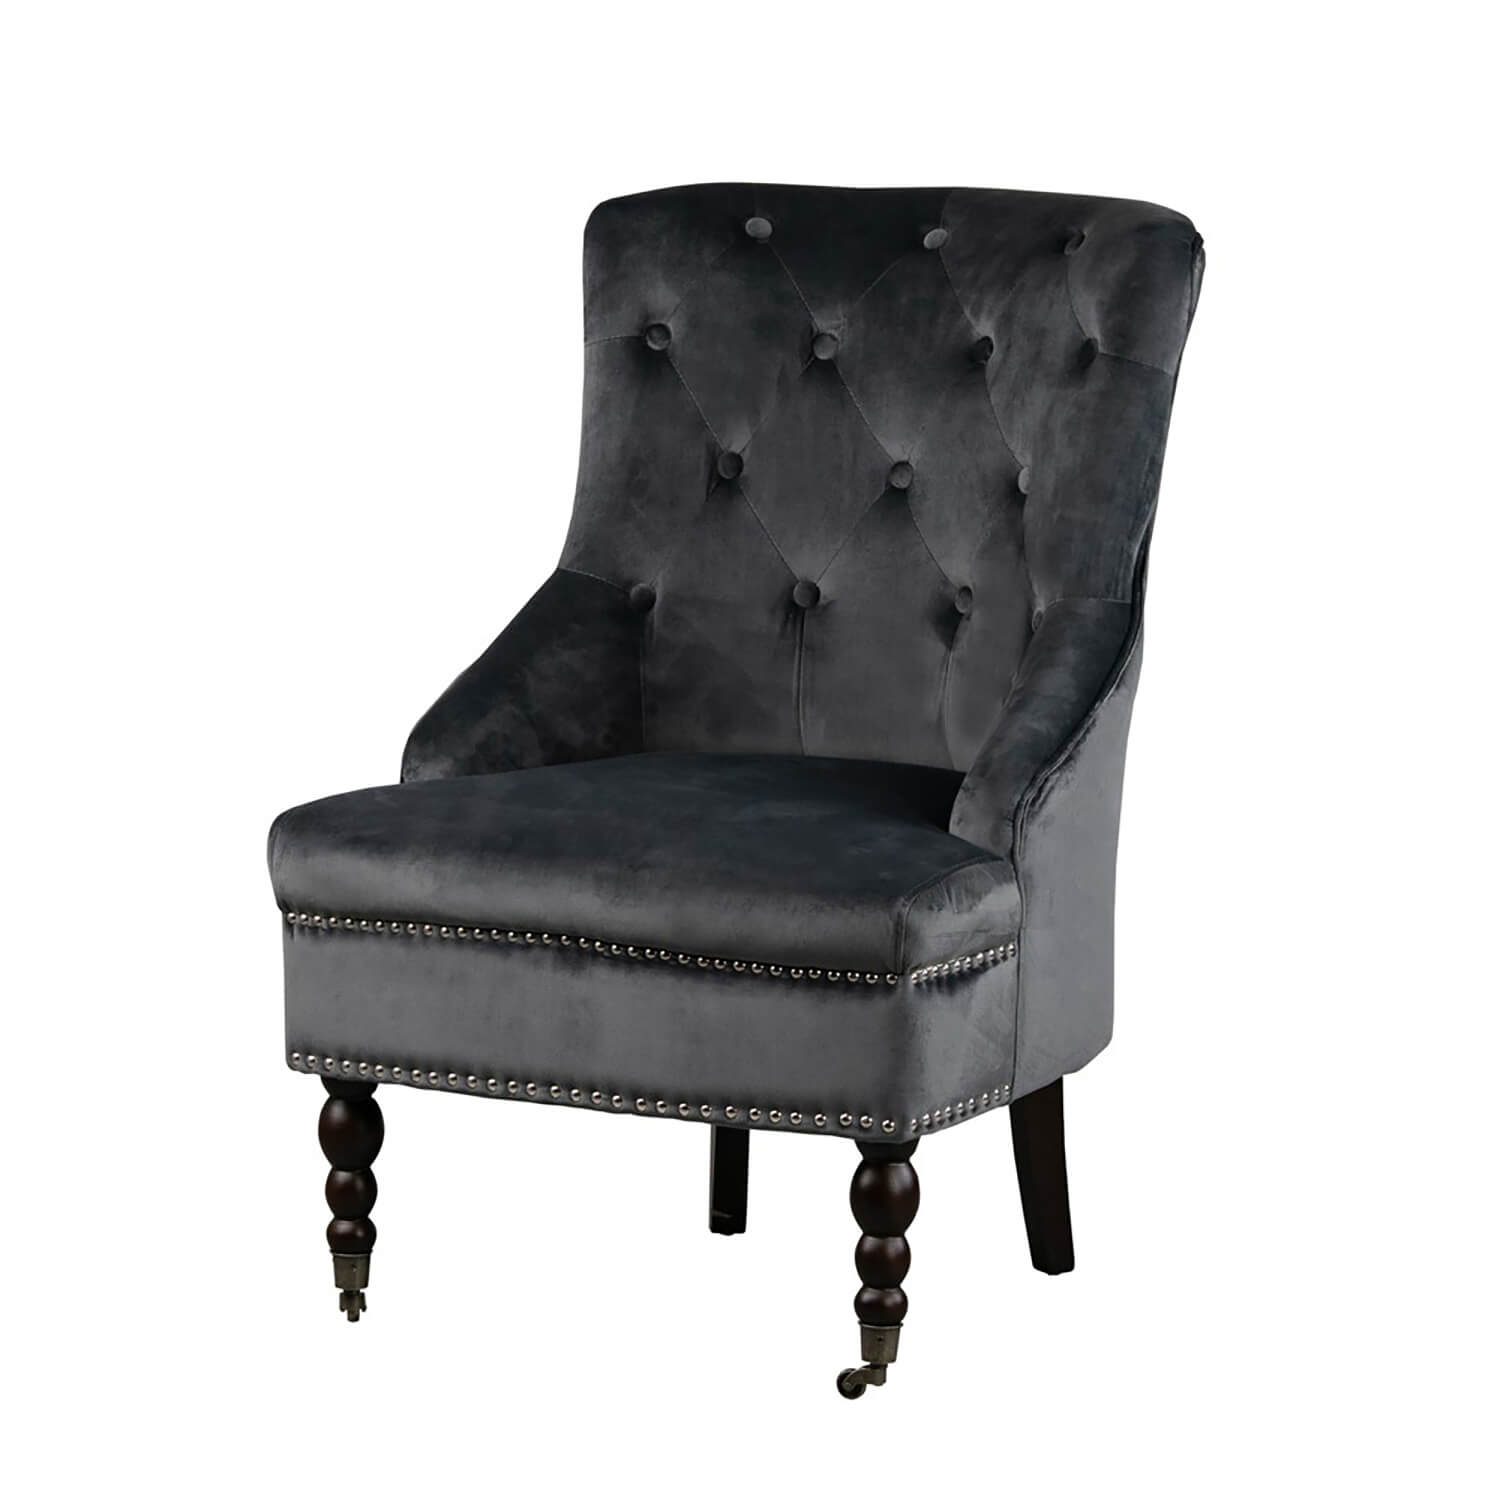 Tara Lane Velvet Torino Accent Chair - Charcoal 1 Shaws Department Stores